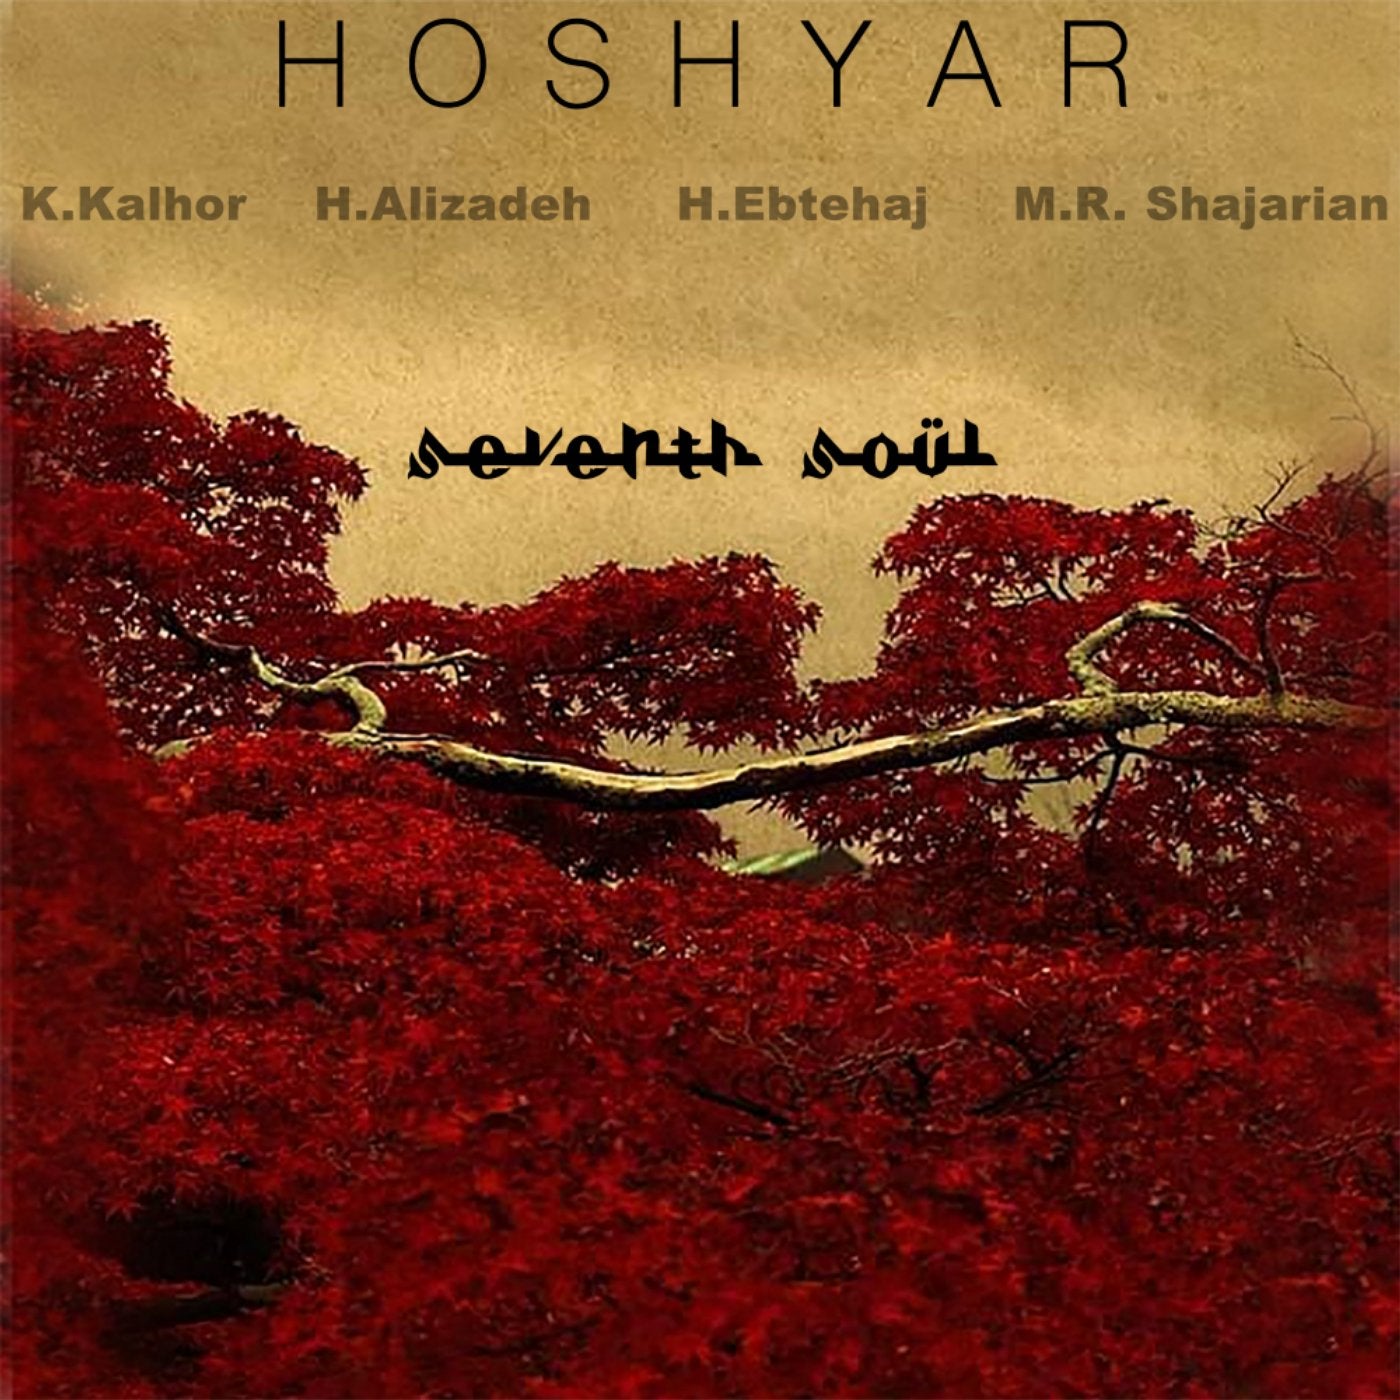 Hoshyar